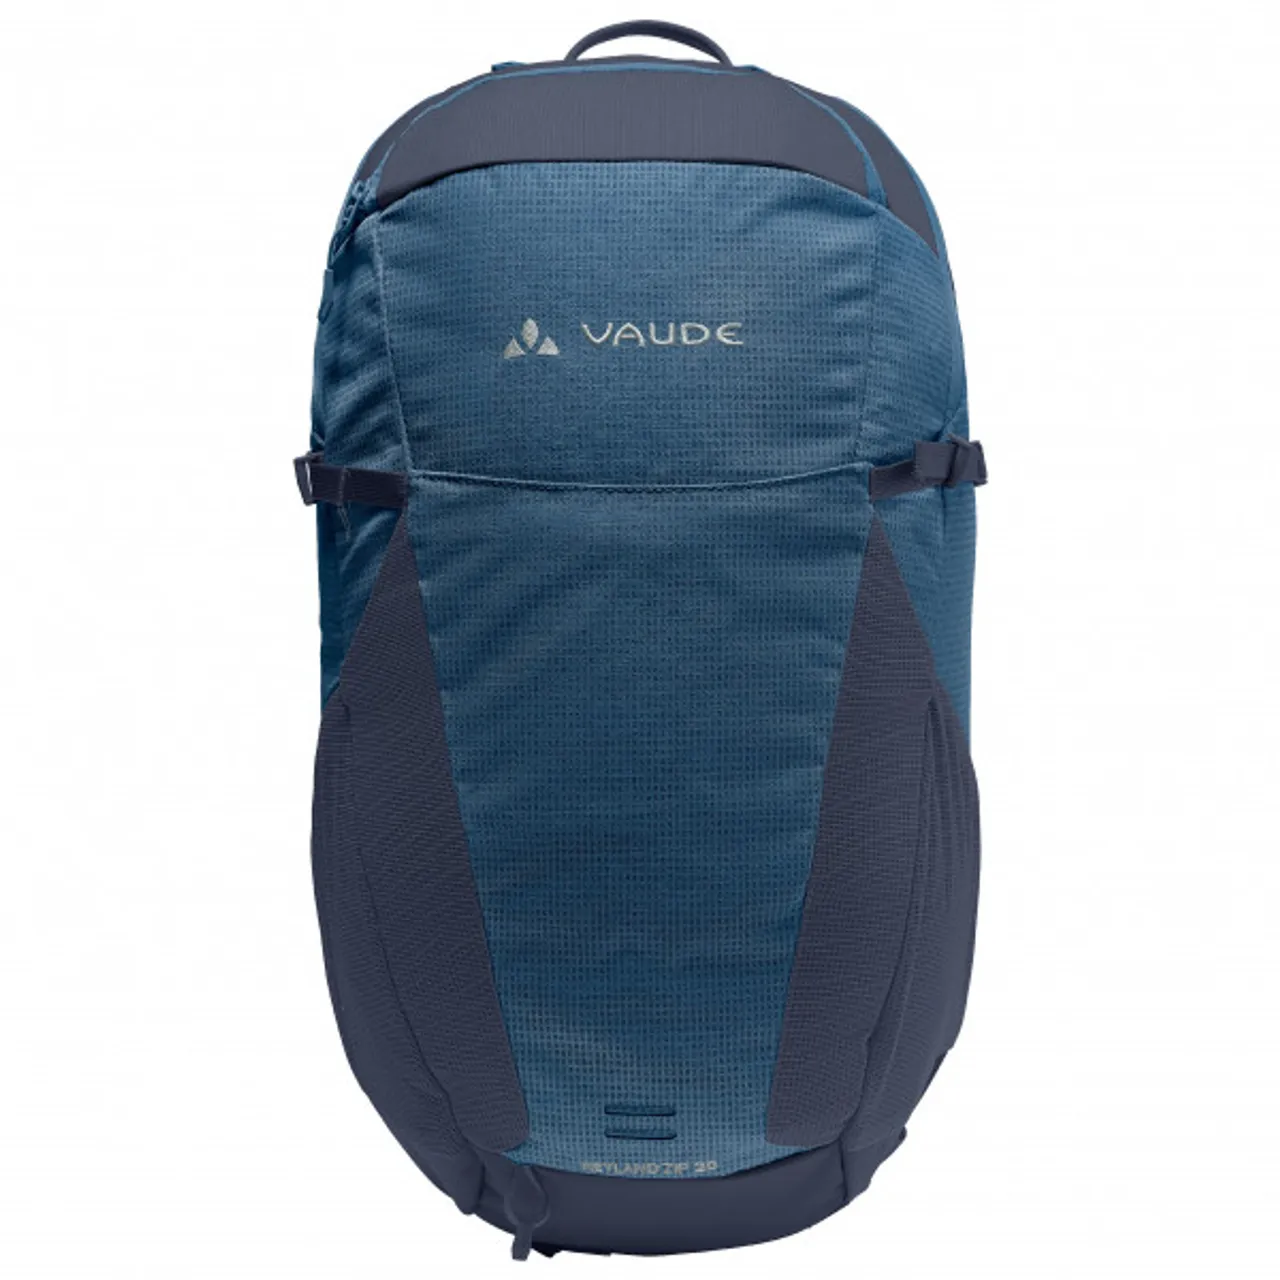 Vaude - Neyland Zip 20 - Walking backpack size 20 l, blue